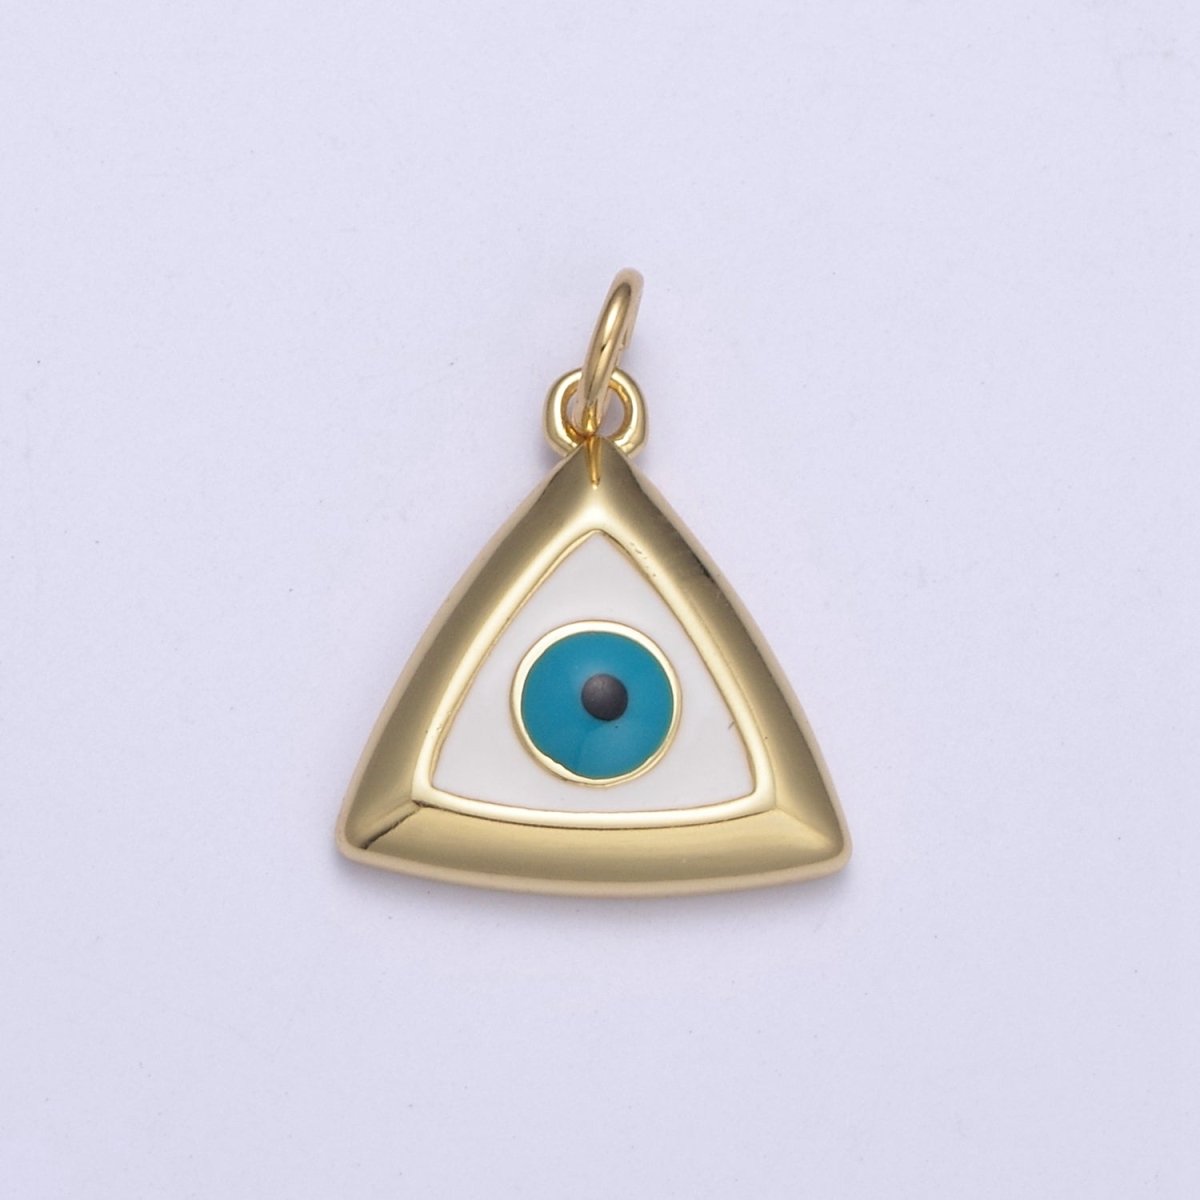 Eye of Providence Charm Gold Triangle Turquoise Evil Eye Third Eye Dainty Triangle Protection Amulet Jewelry Pendant C-639 - DLUXCA